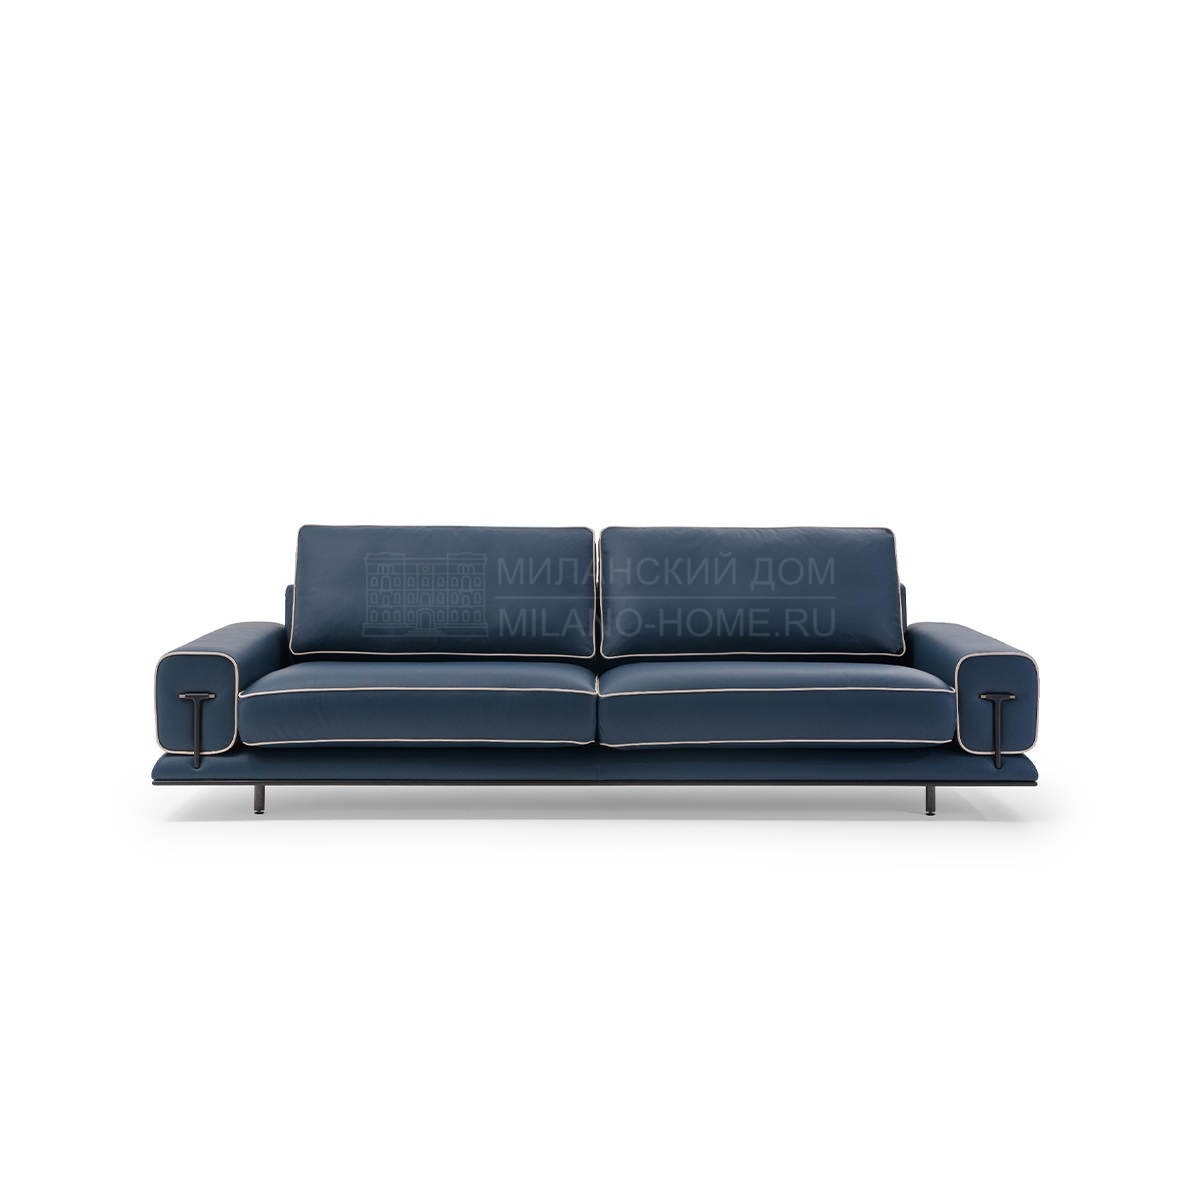 Прямой диван Blues sofa из Италии фабрики TURRI